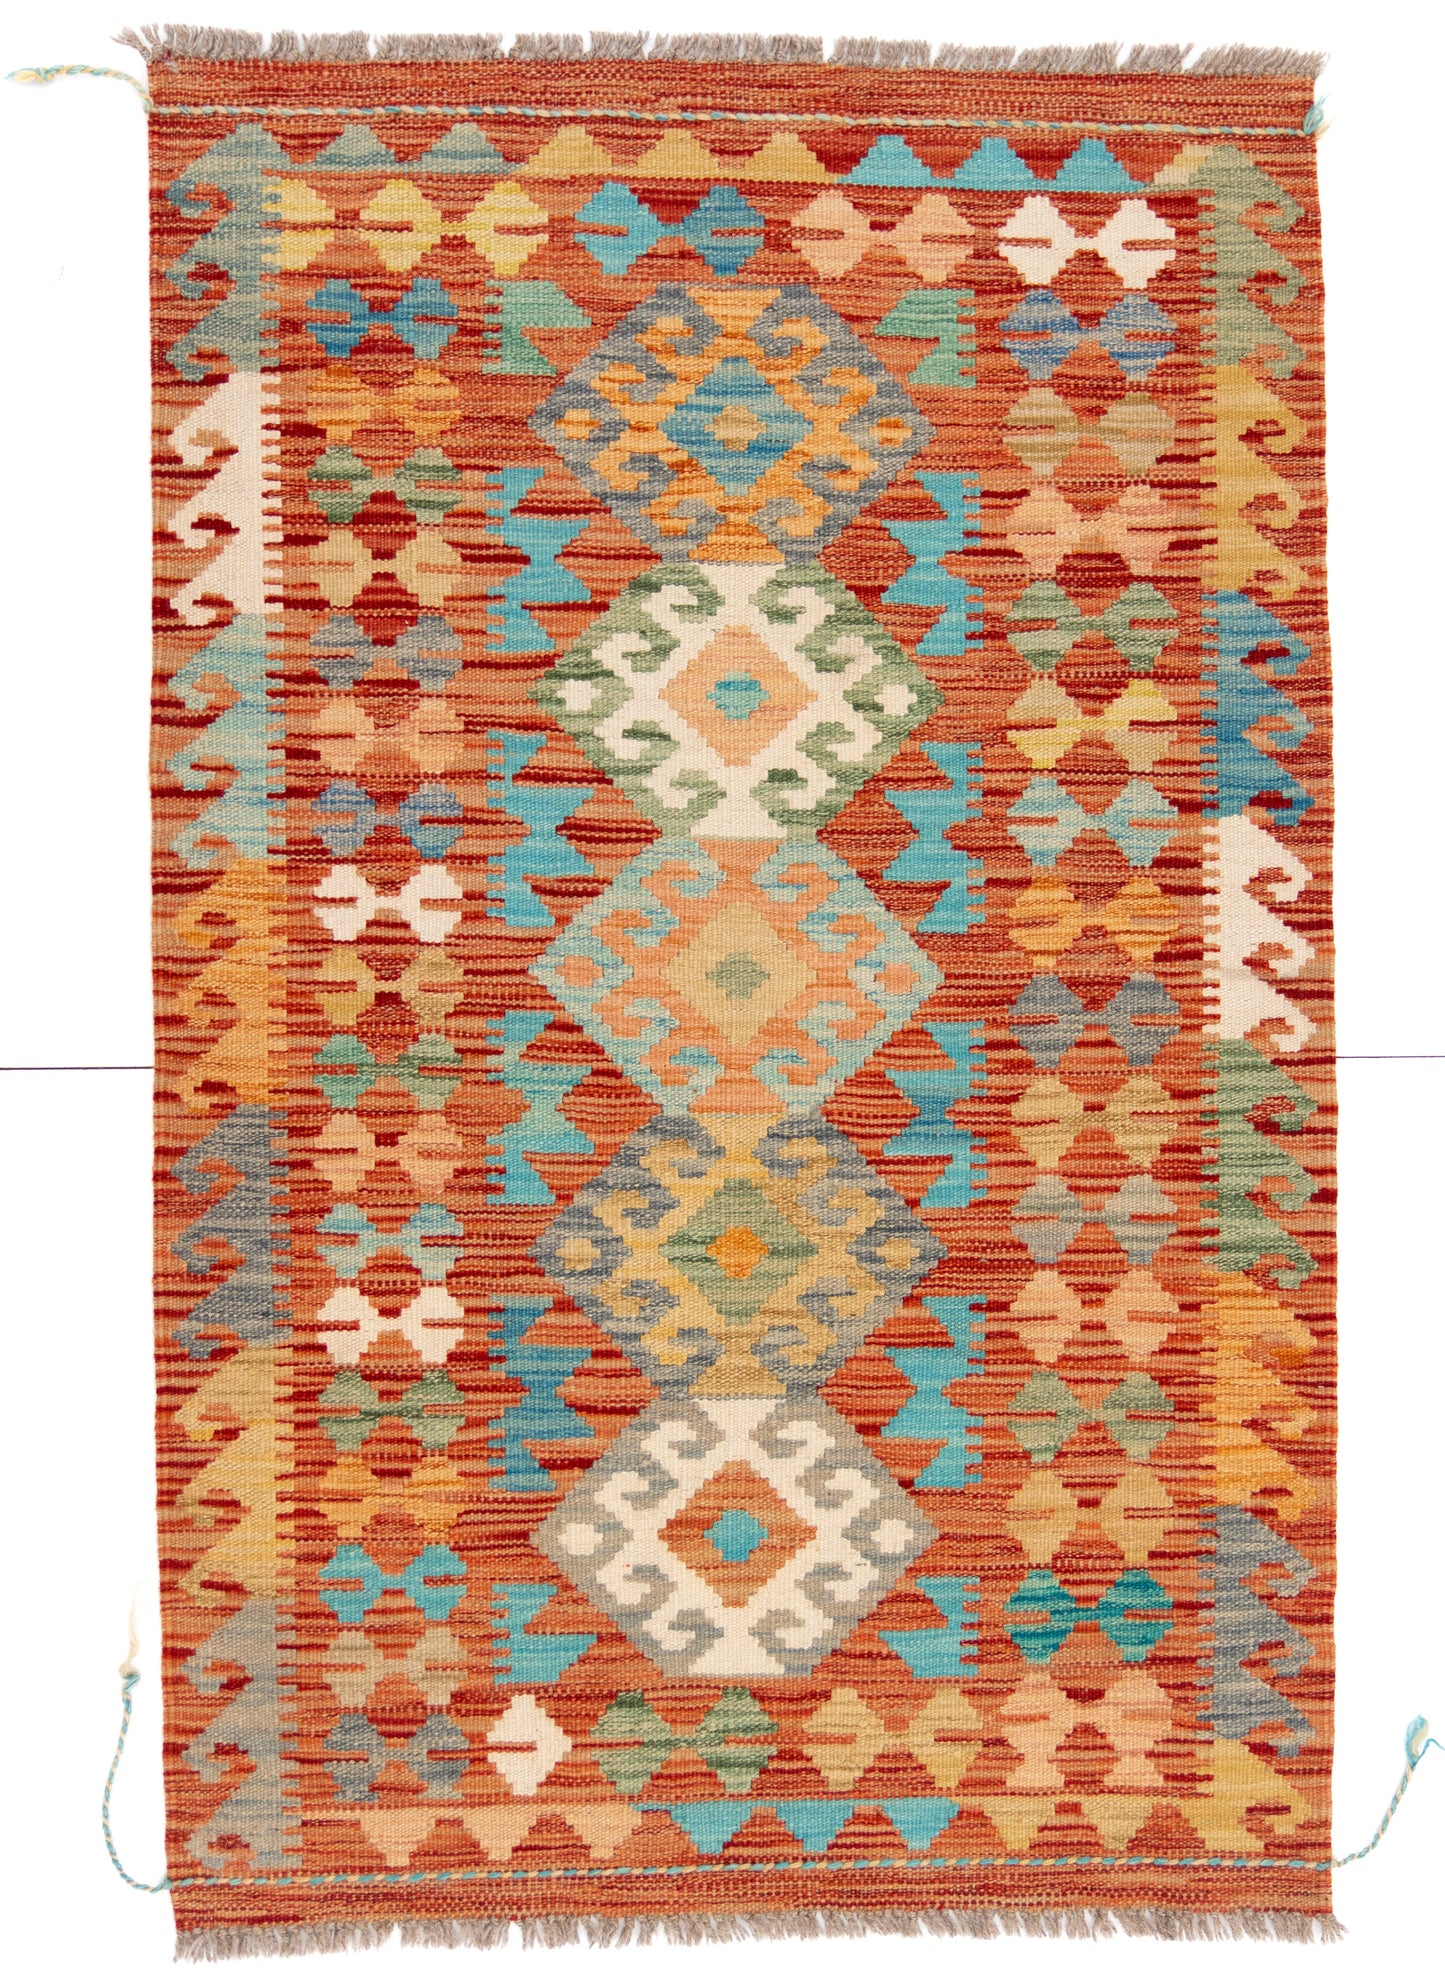 Red/Orange Kilim Carpet with Bright Geometric Shapes